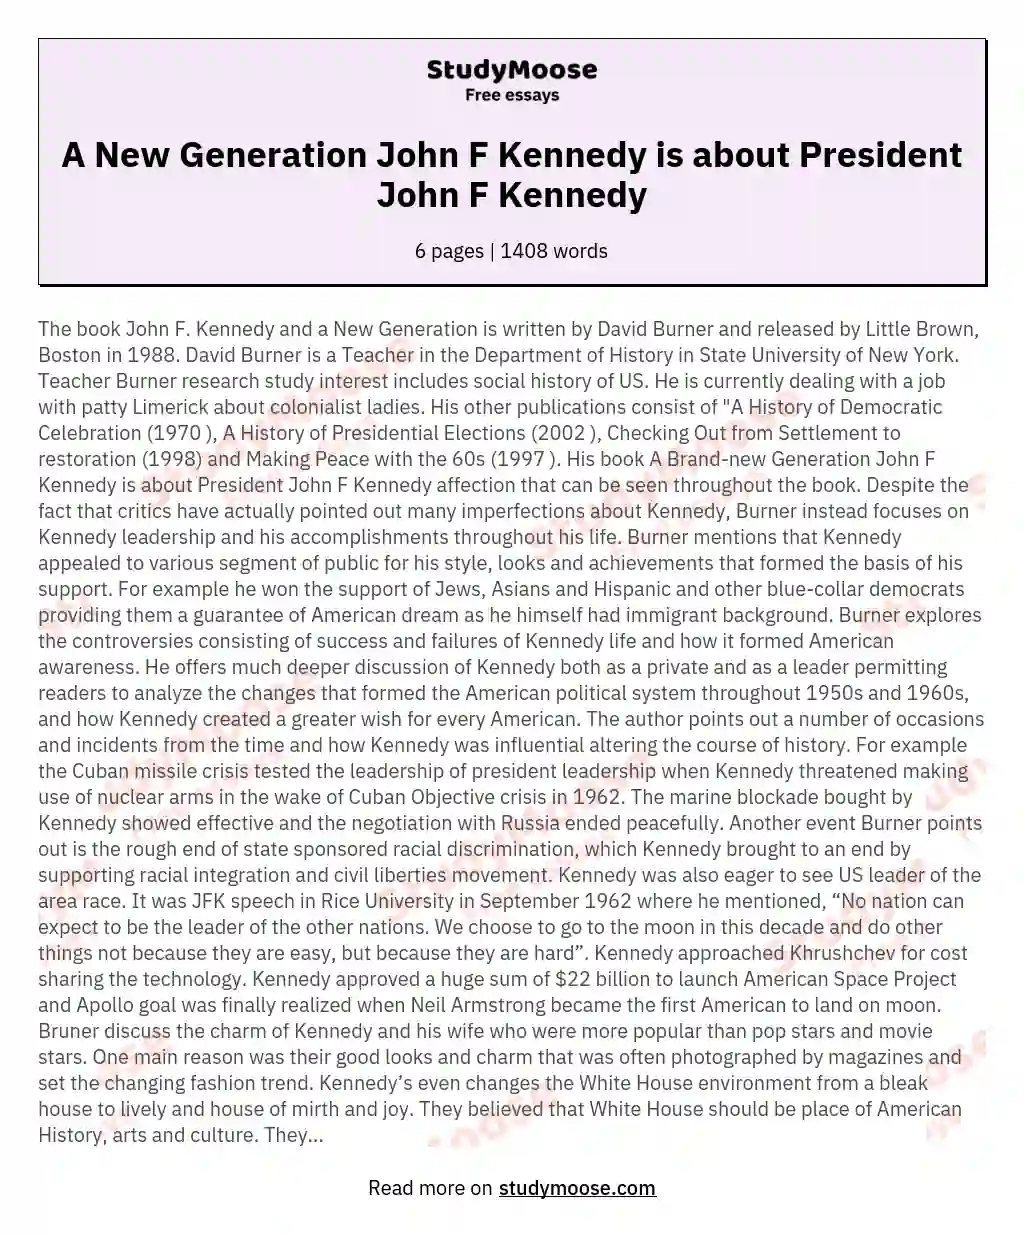 A New Generation John F Kennedy is about President John F Kennedy